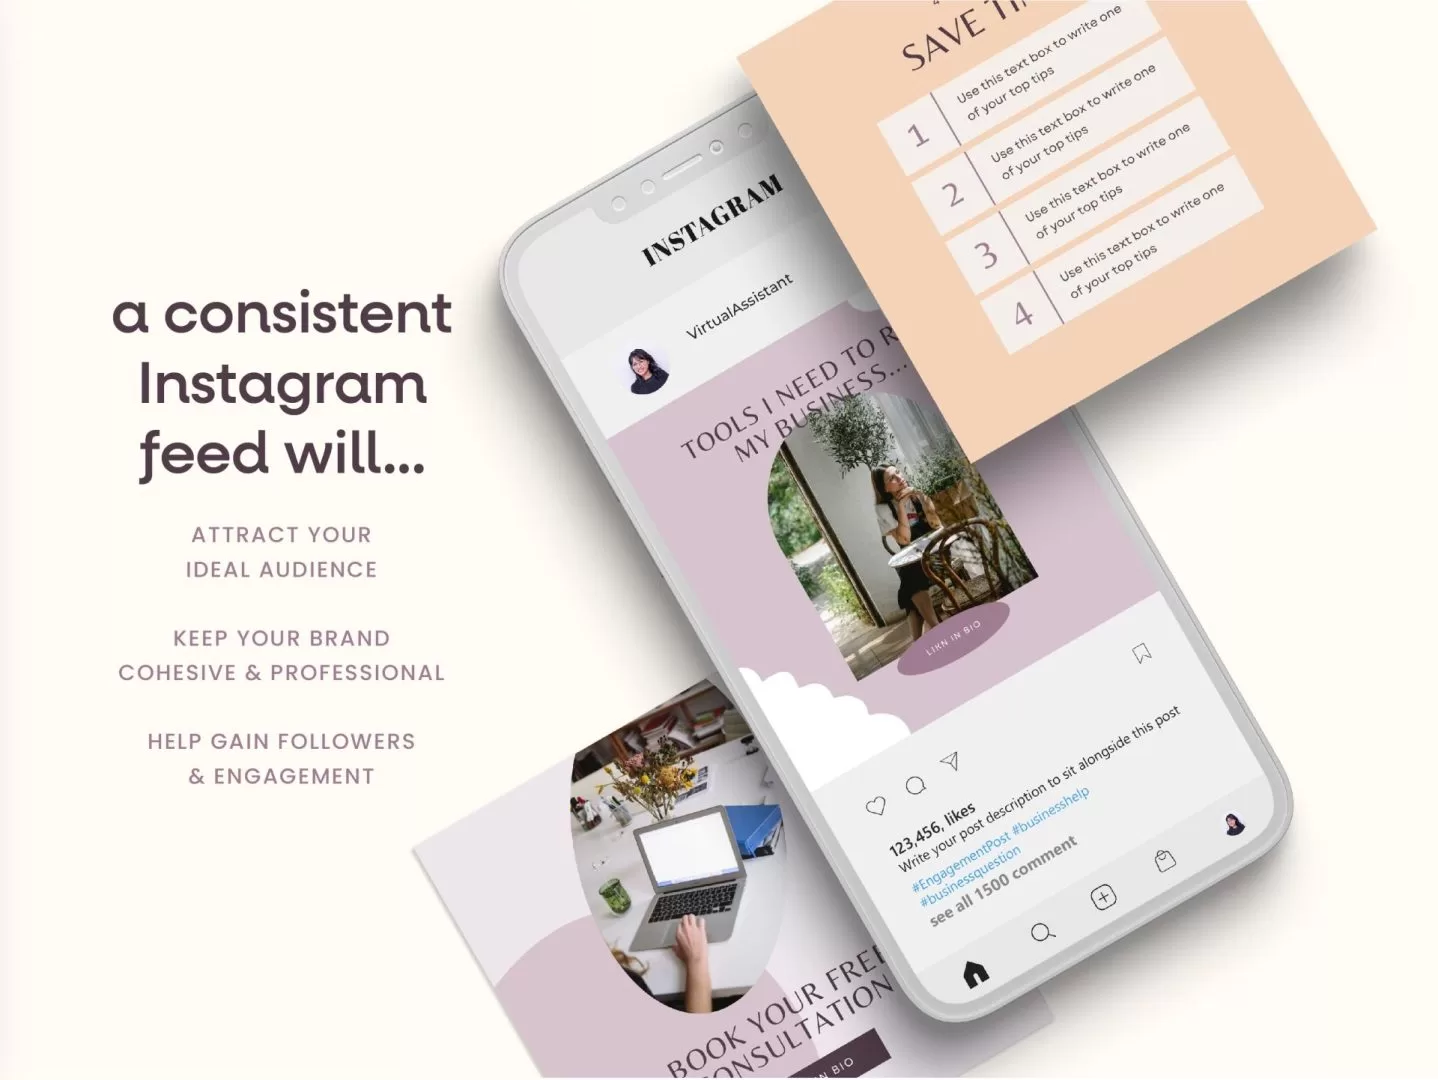 Virtual Assistant Instagram Canva Templates